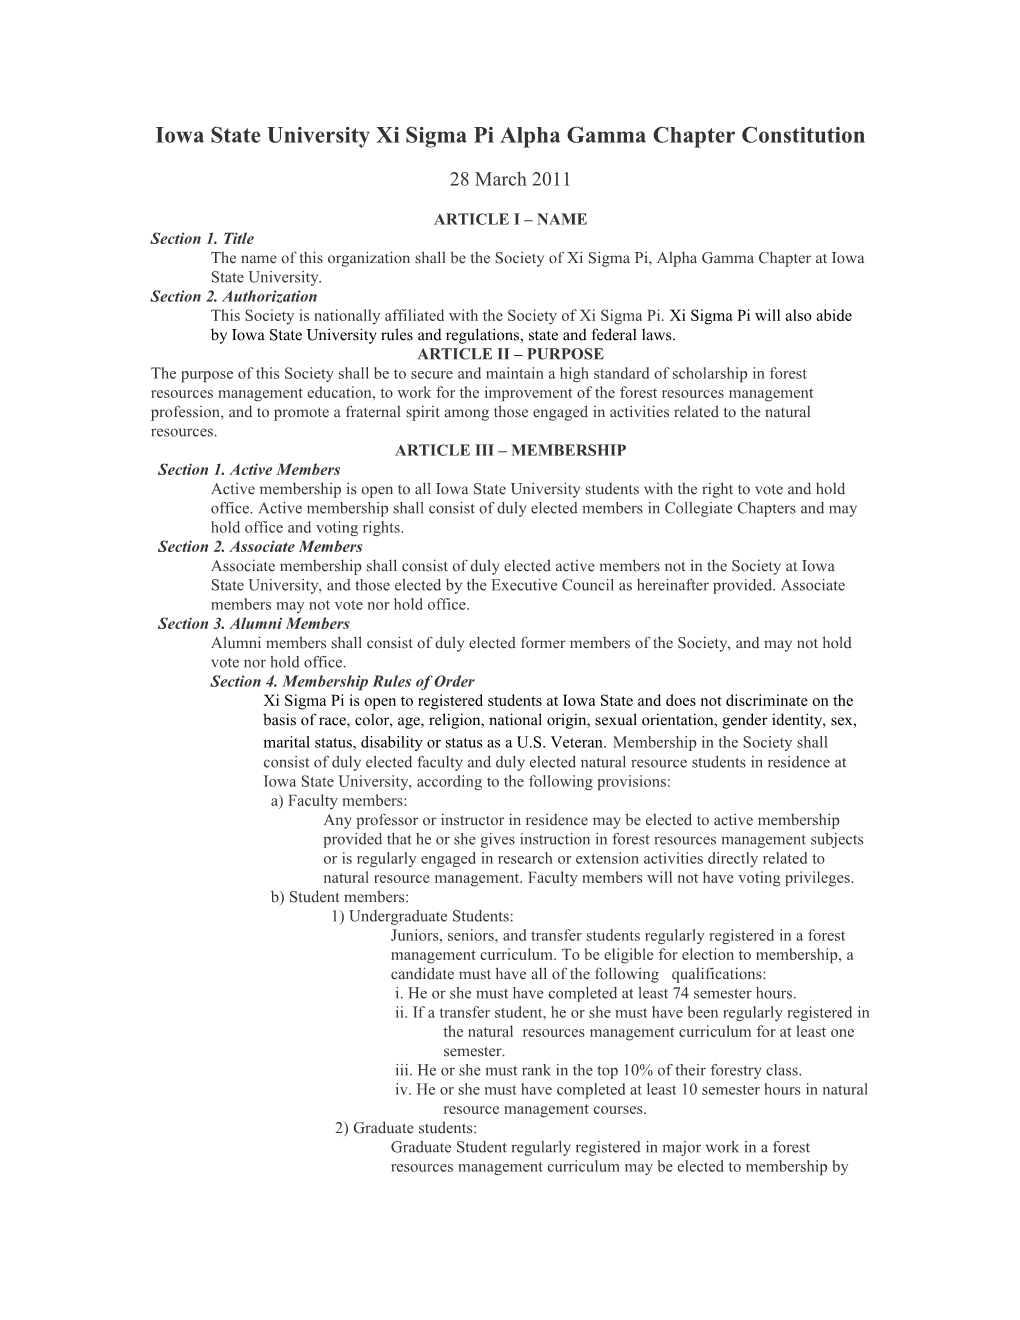 Iowa State University Xi Sigma Pi Alpha Chapter Constitution